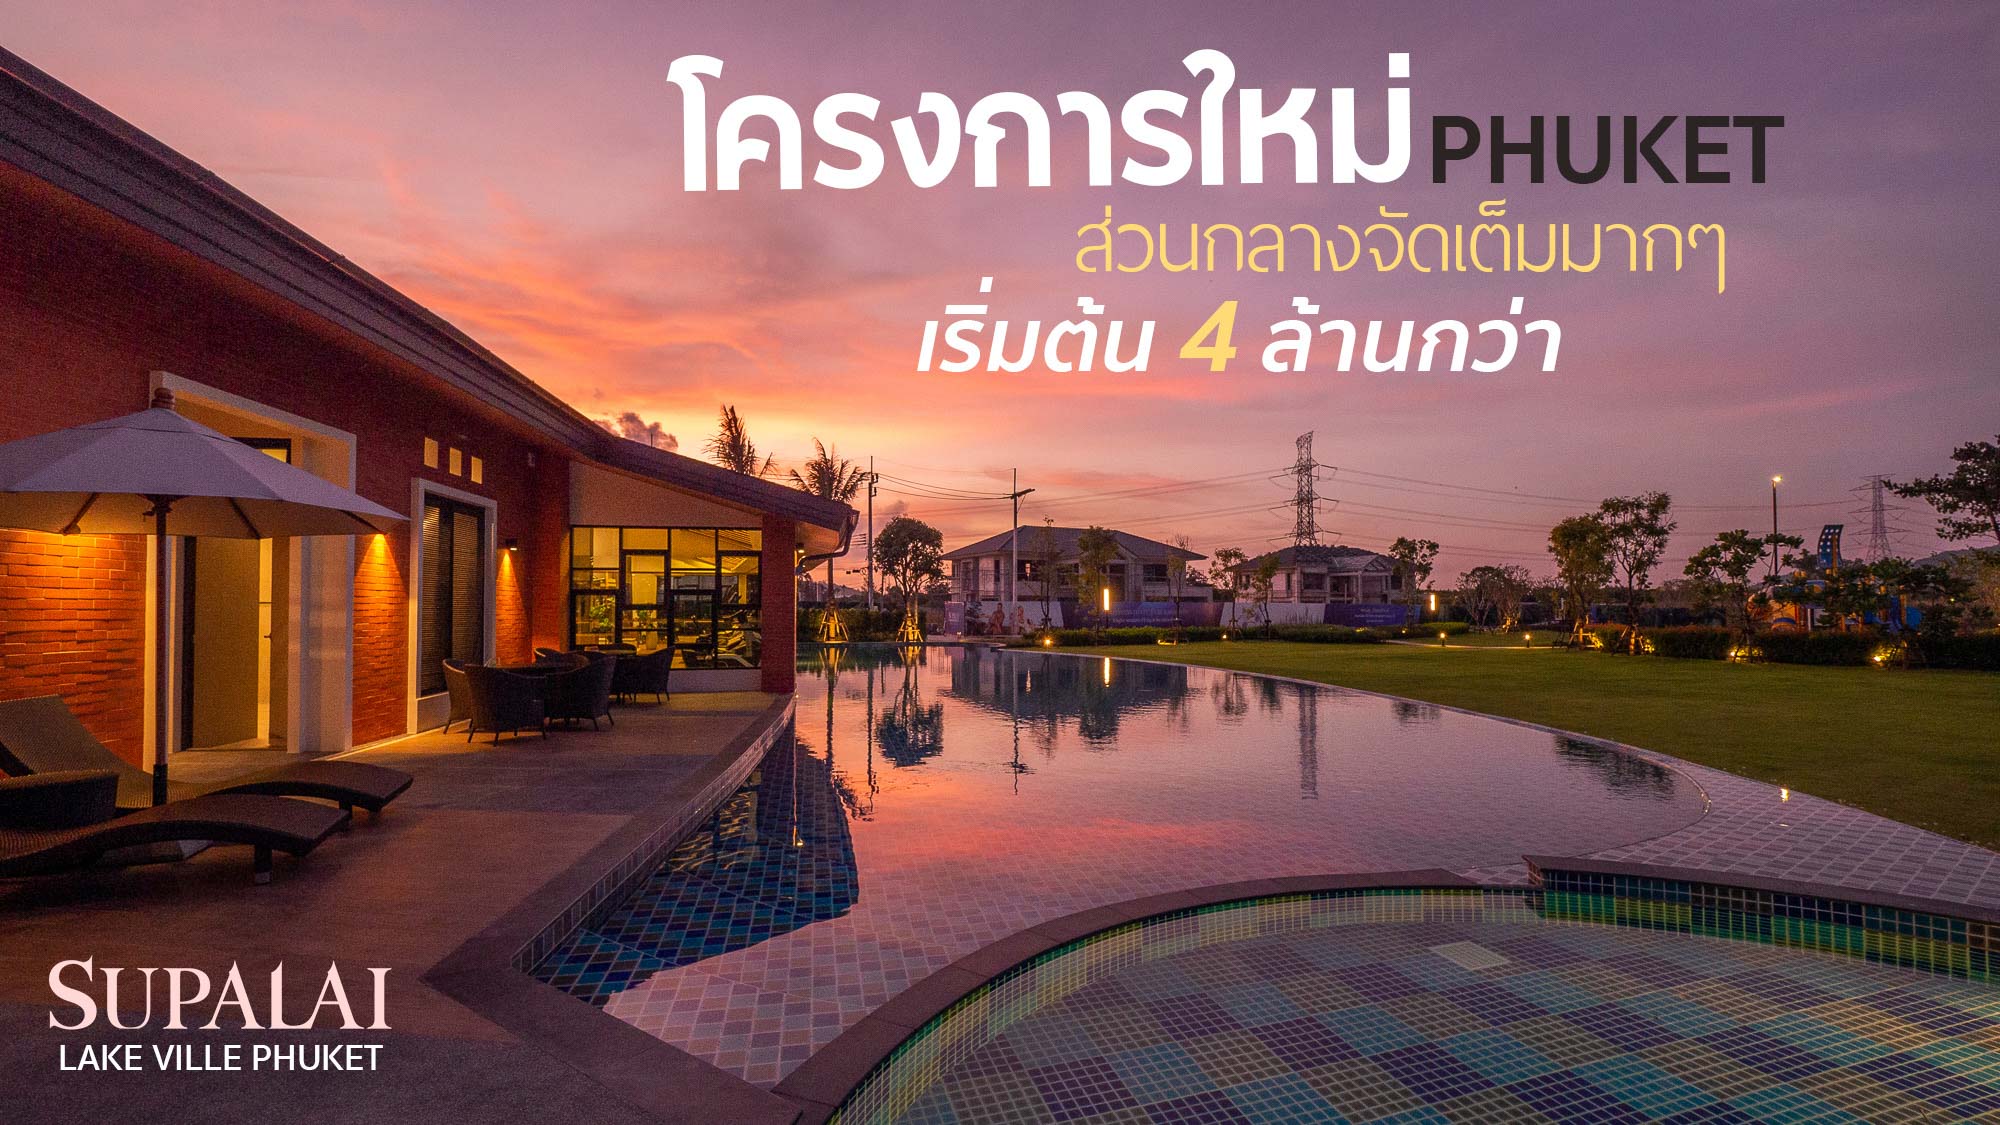 Supalai Scenic Bay Pool Villa Phuket วิลล่าวิวทะเล 